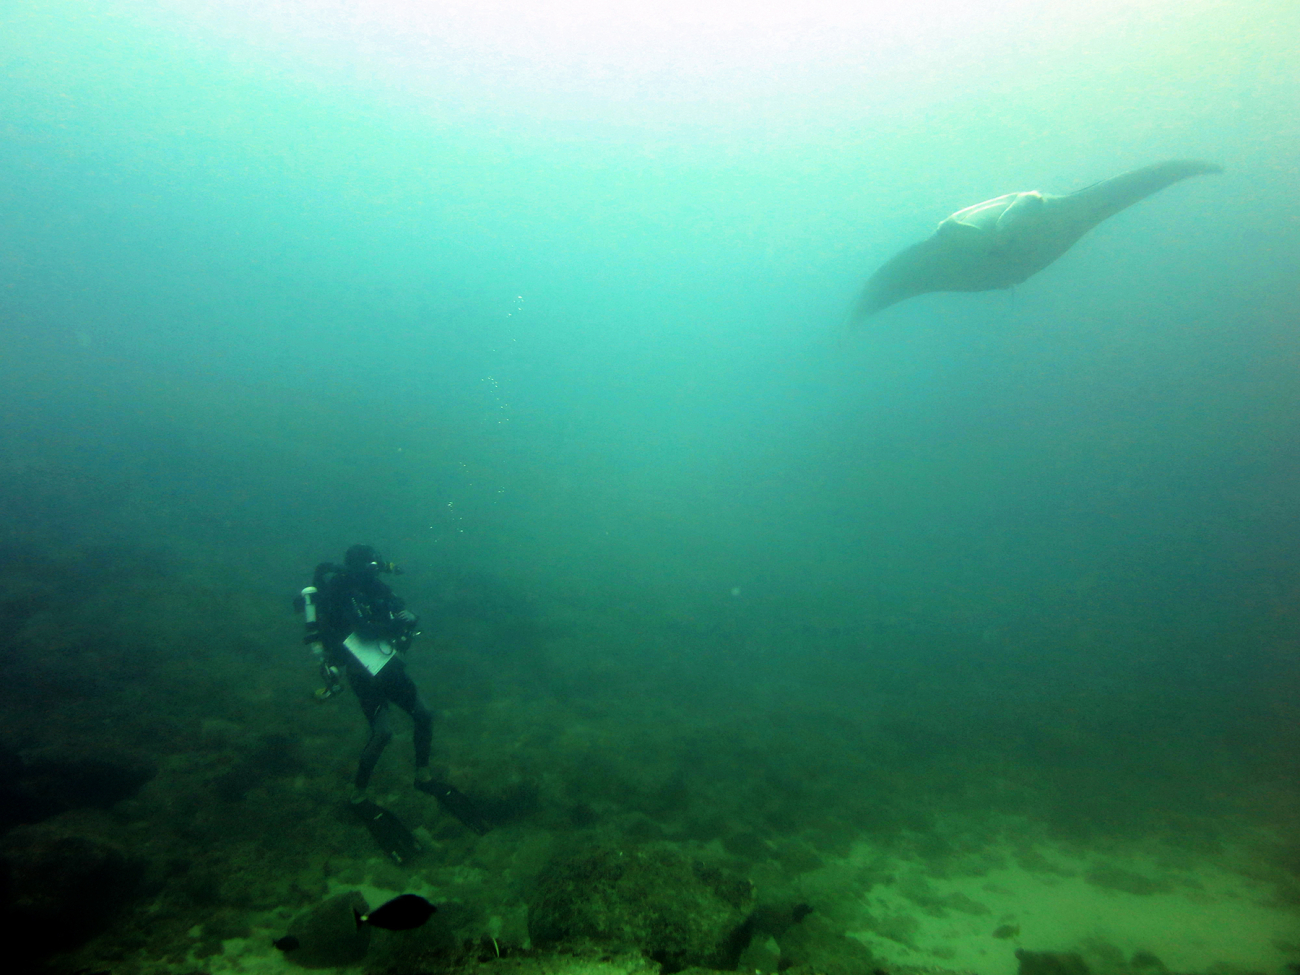 Diving on closed circuit rebreather, Kosta Stamoulis encounters a manta ray(Manta birostris) during a SPC visual fish survey